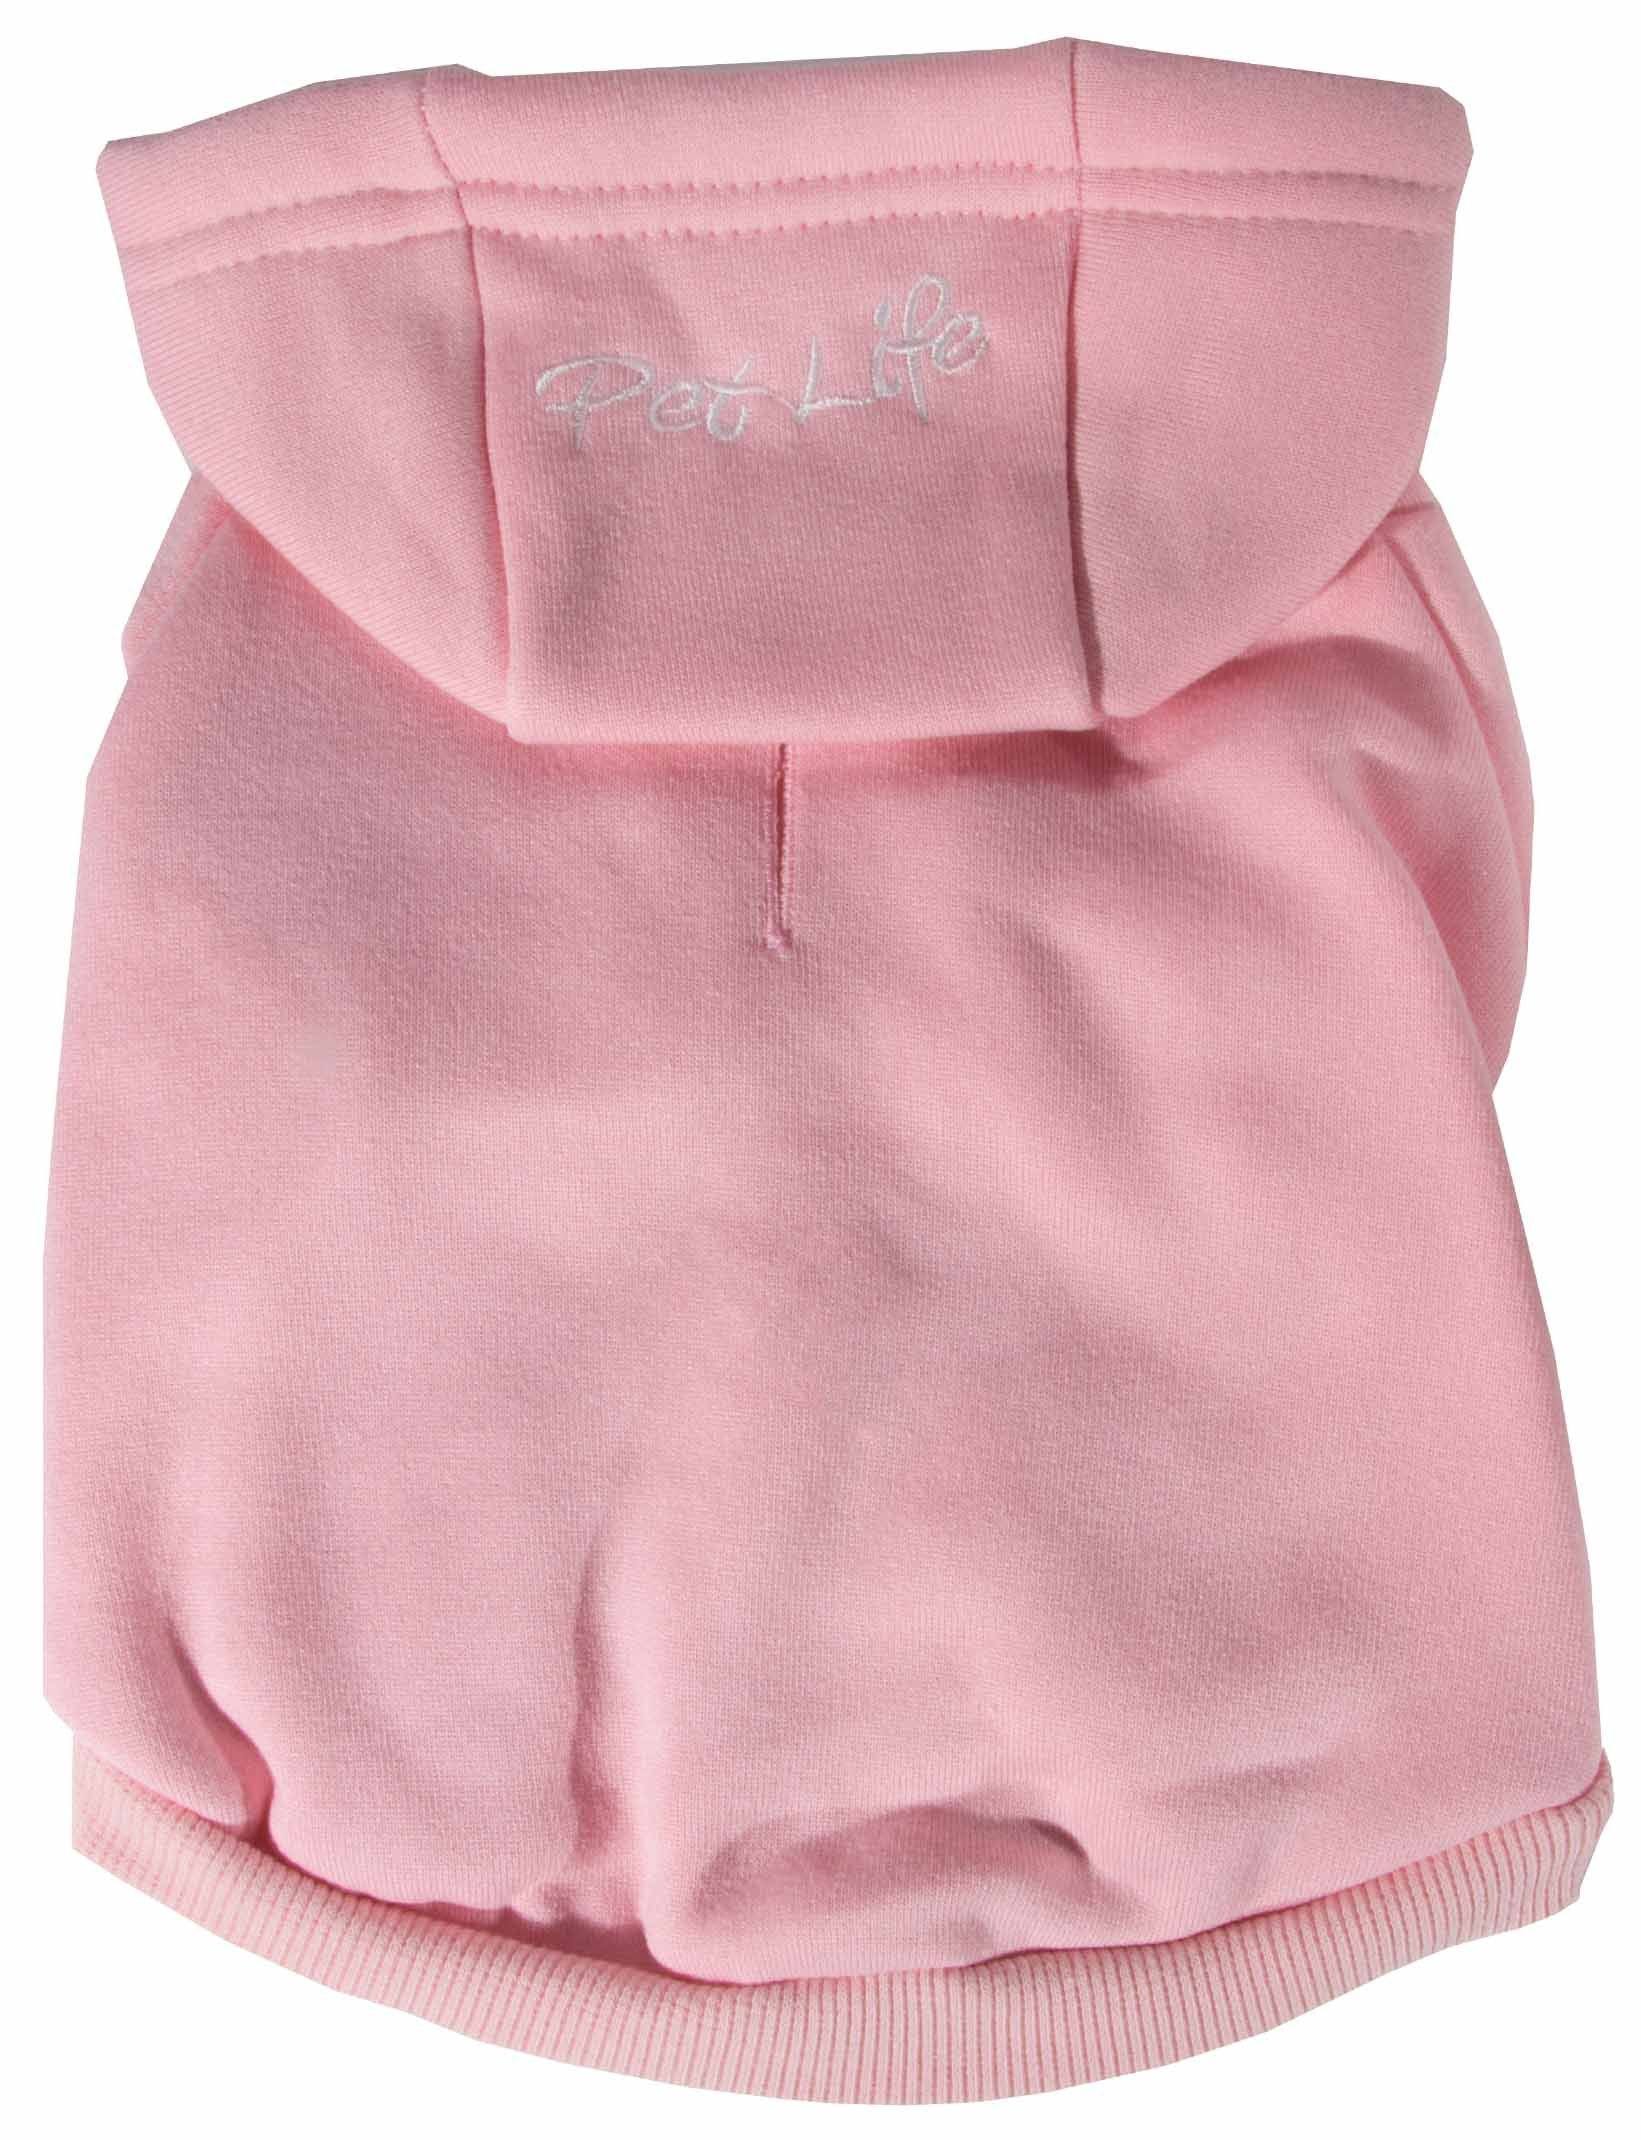 Pet Life ® 'American Classic' Fashion Plush Cotton Hooded Dog Sweater X-Small Pink